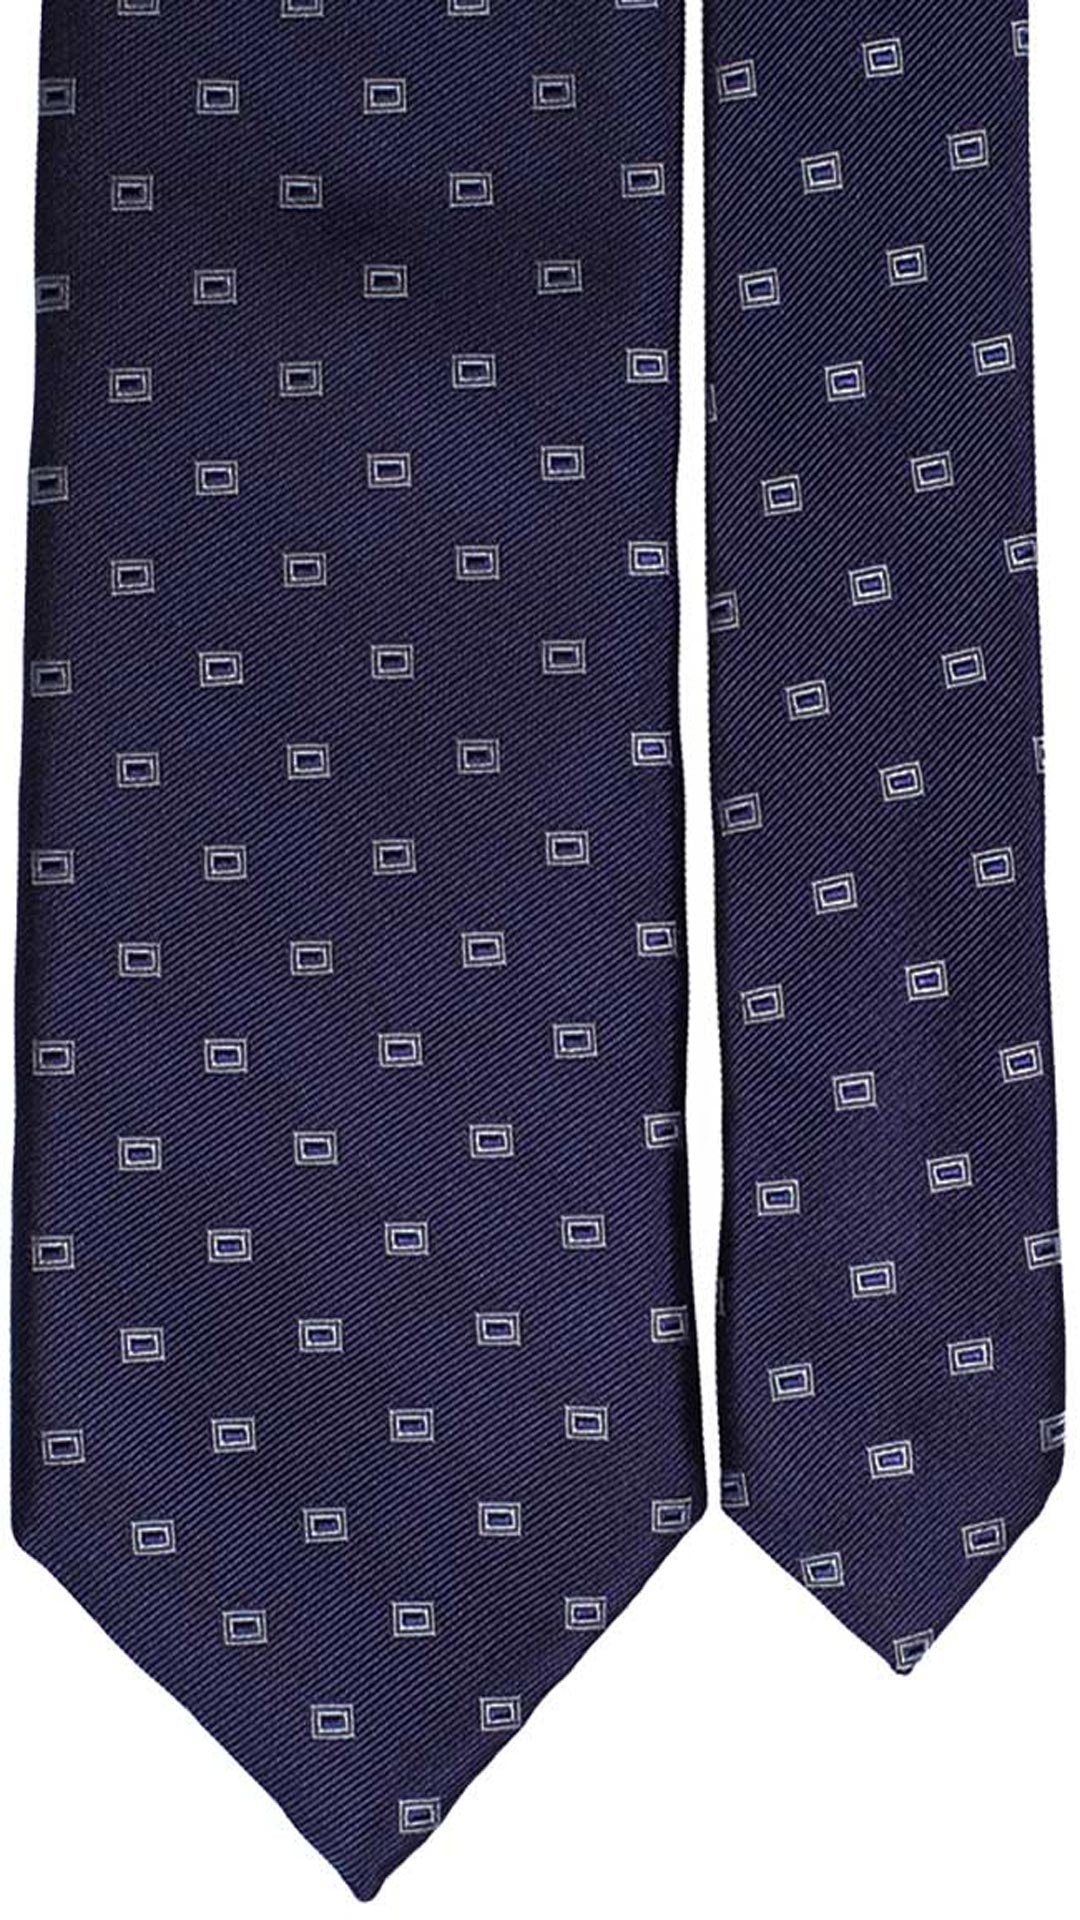 Cravatta da Cerimonia di Seta Blu Navy Fantasia Bianca CY2684 Pala